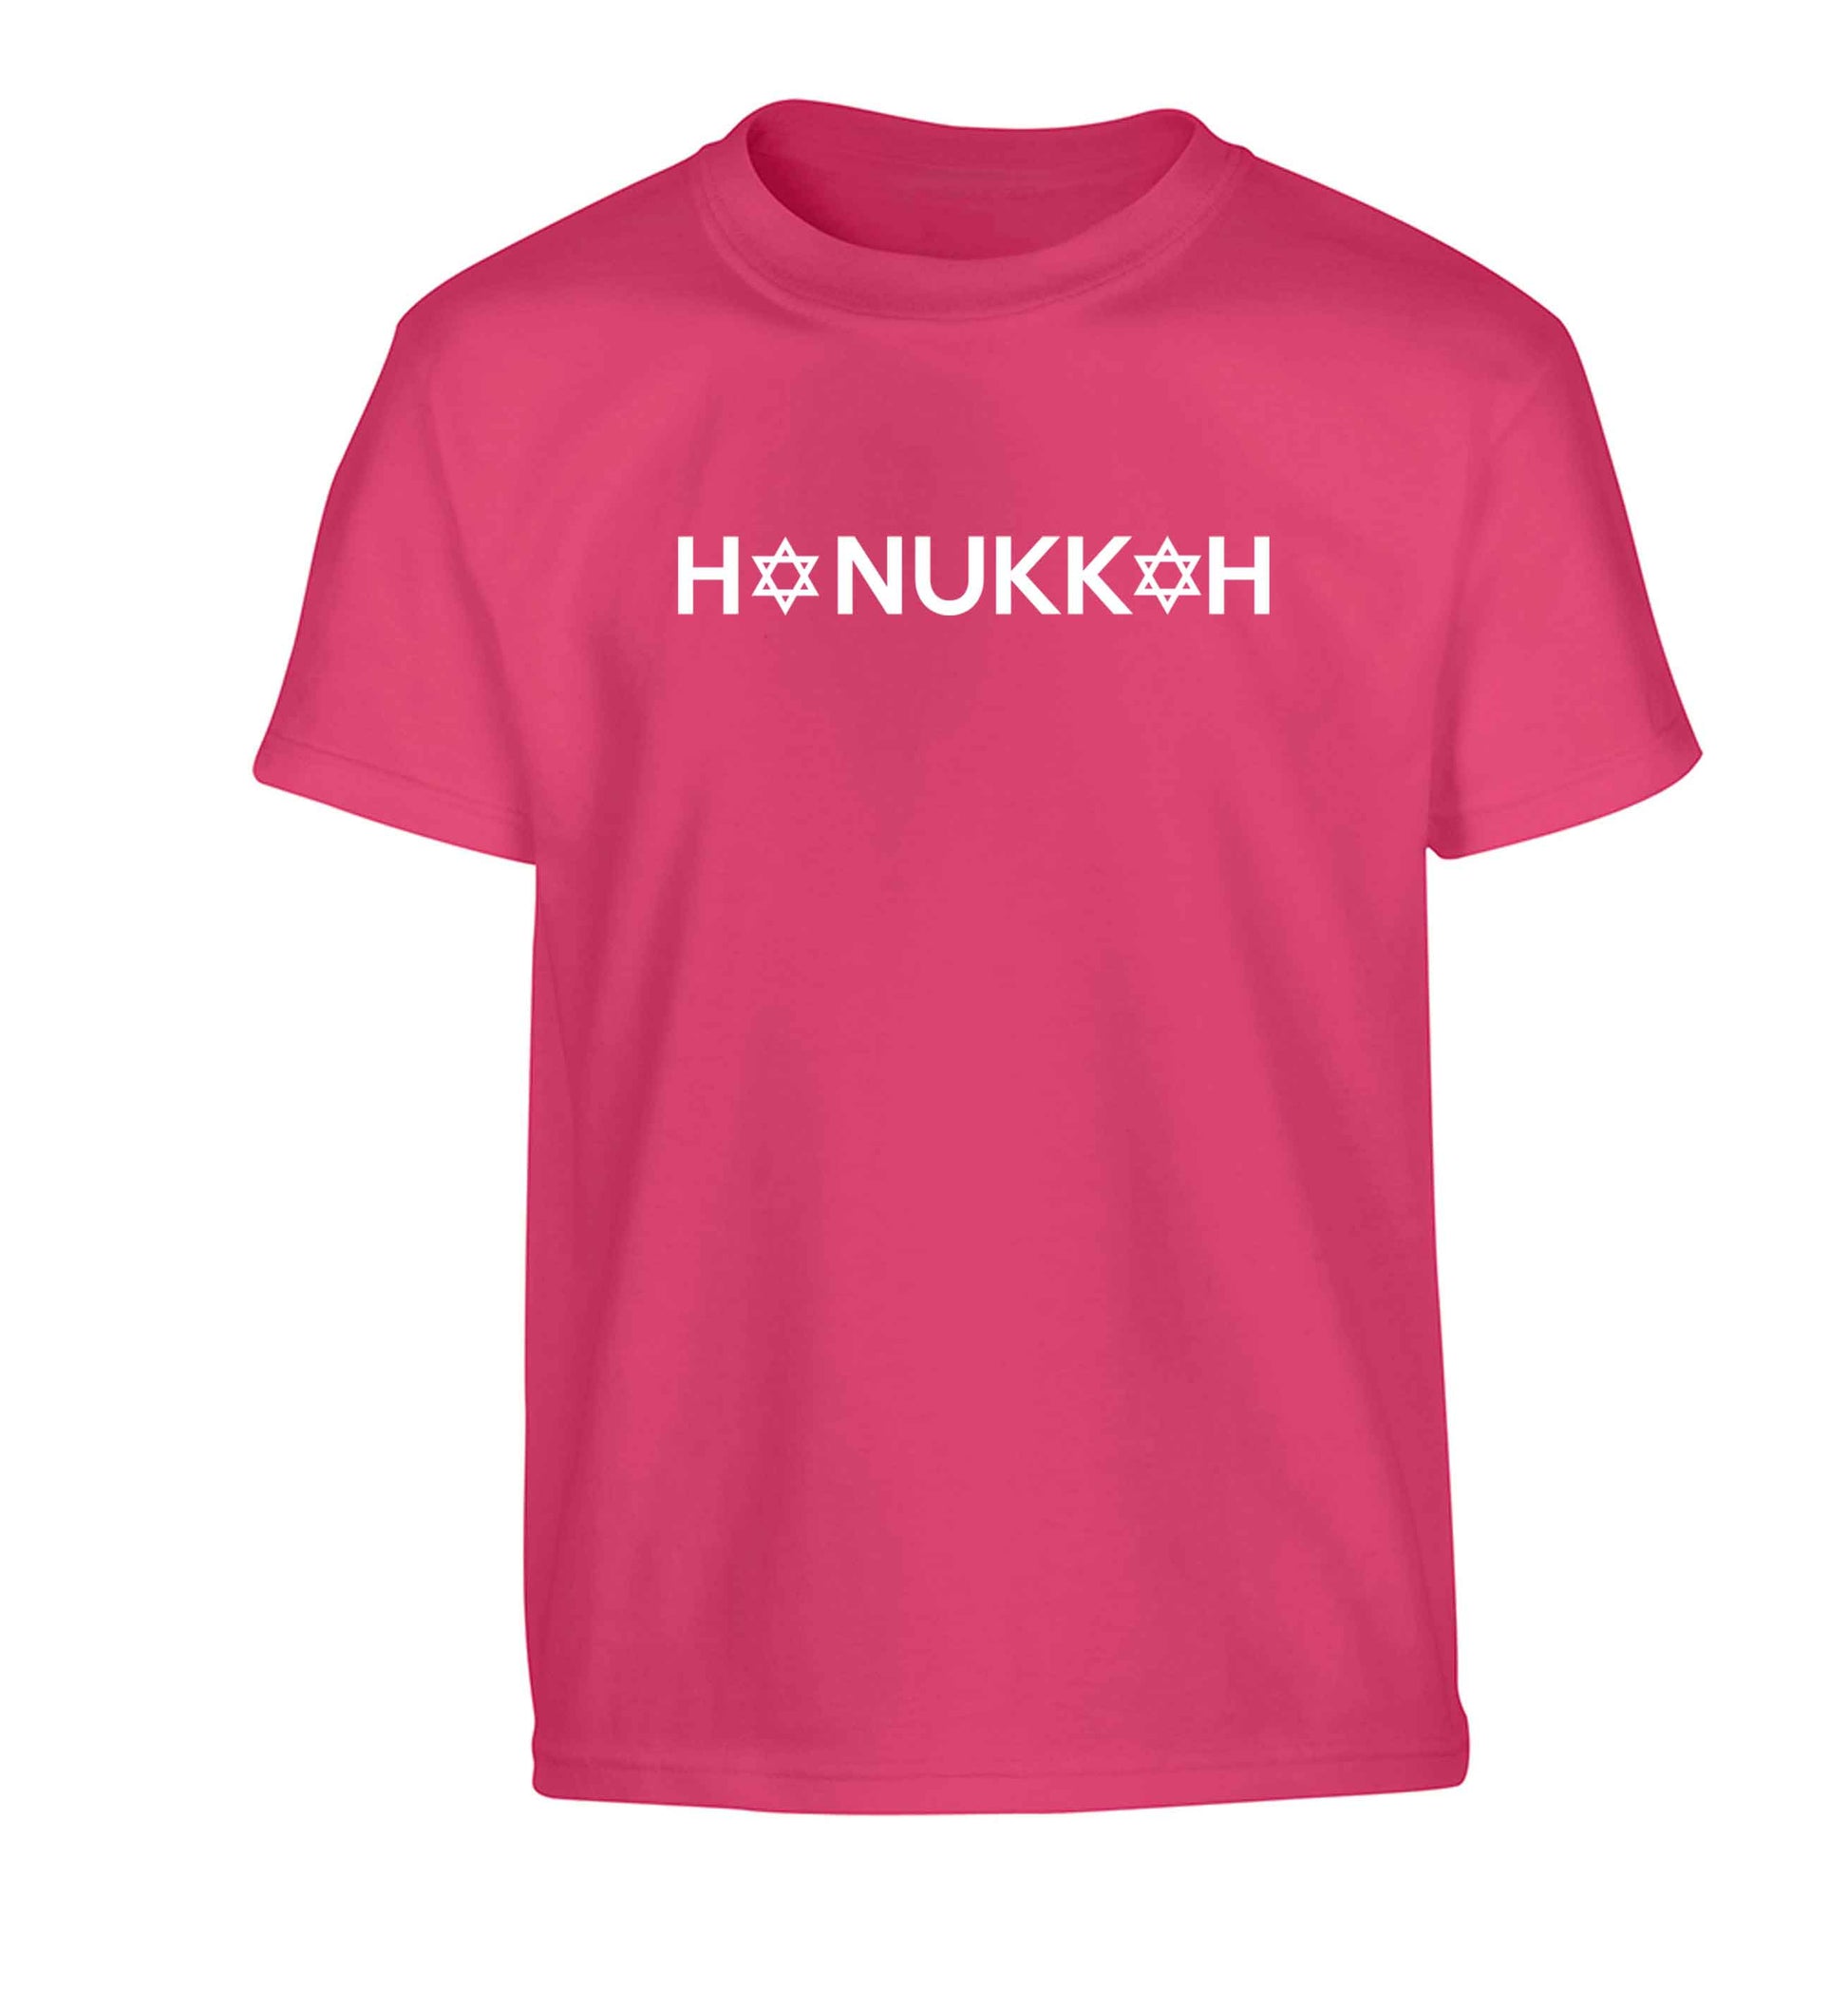 Hanukkah star of david Children's pink Tshirt 12-13 Years